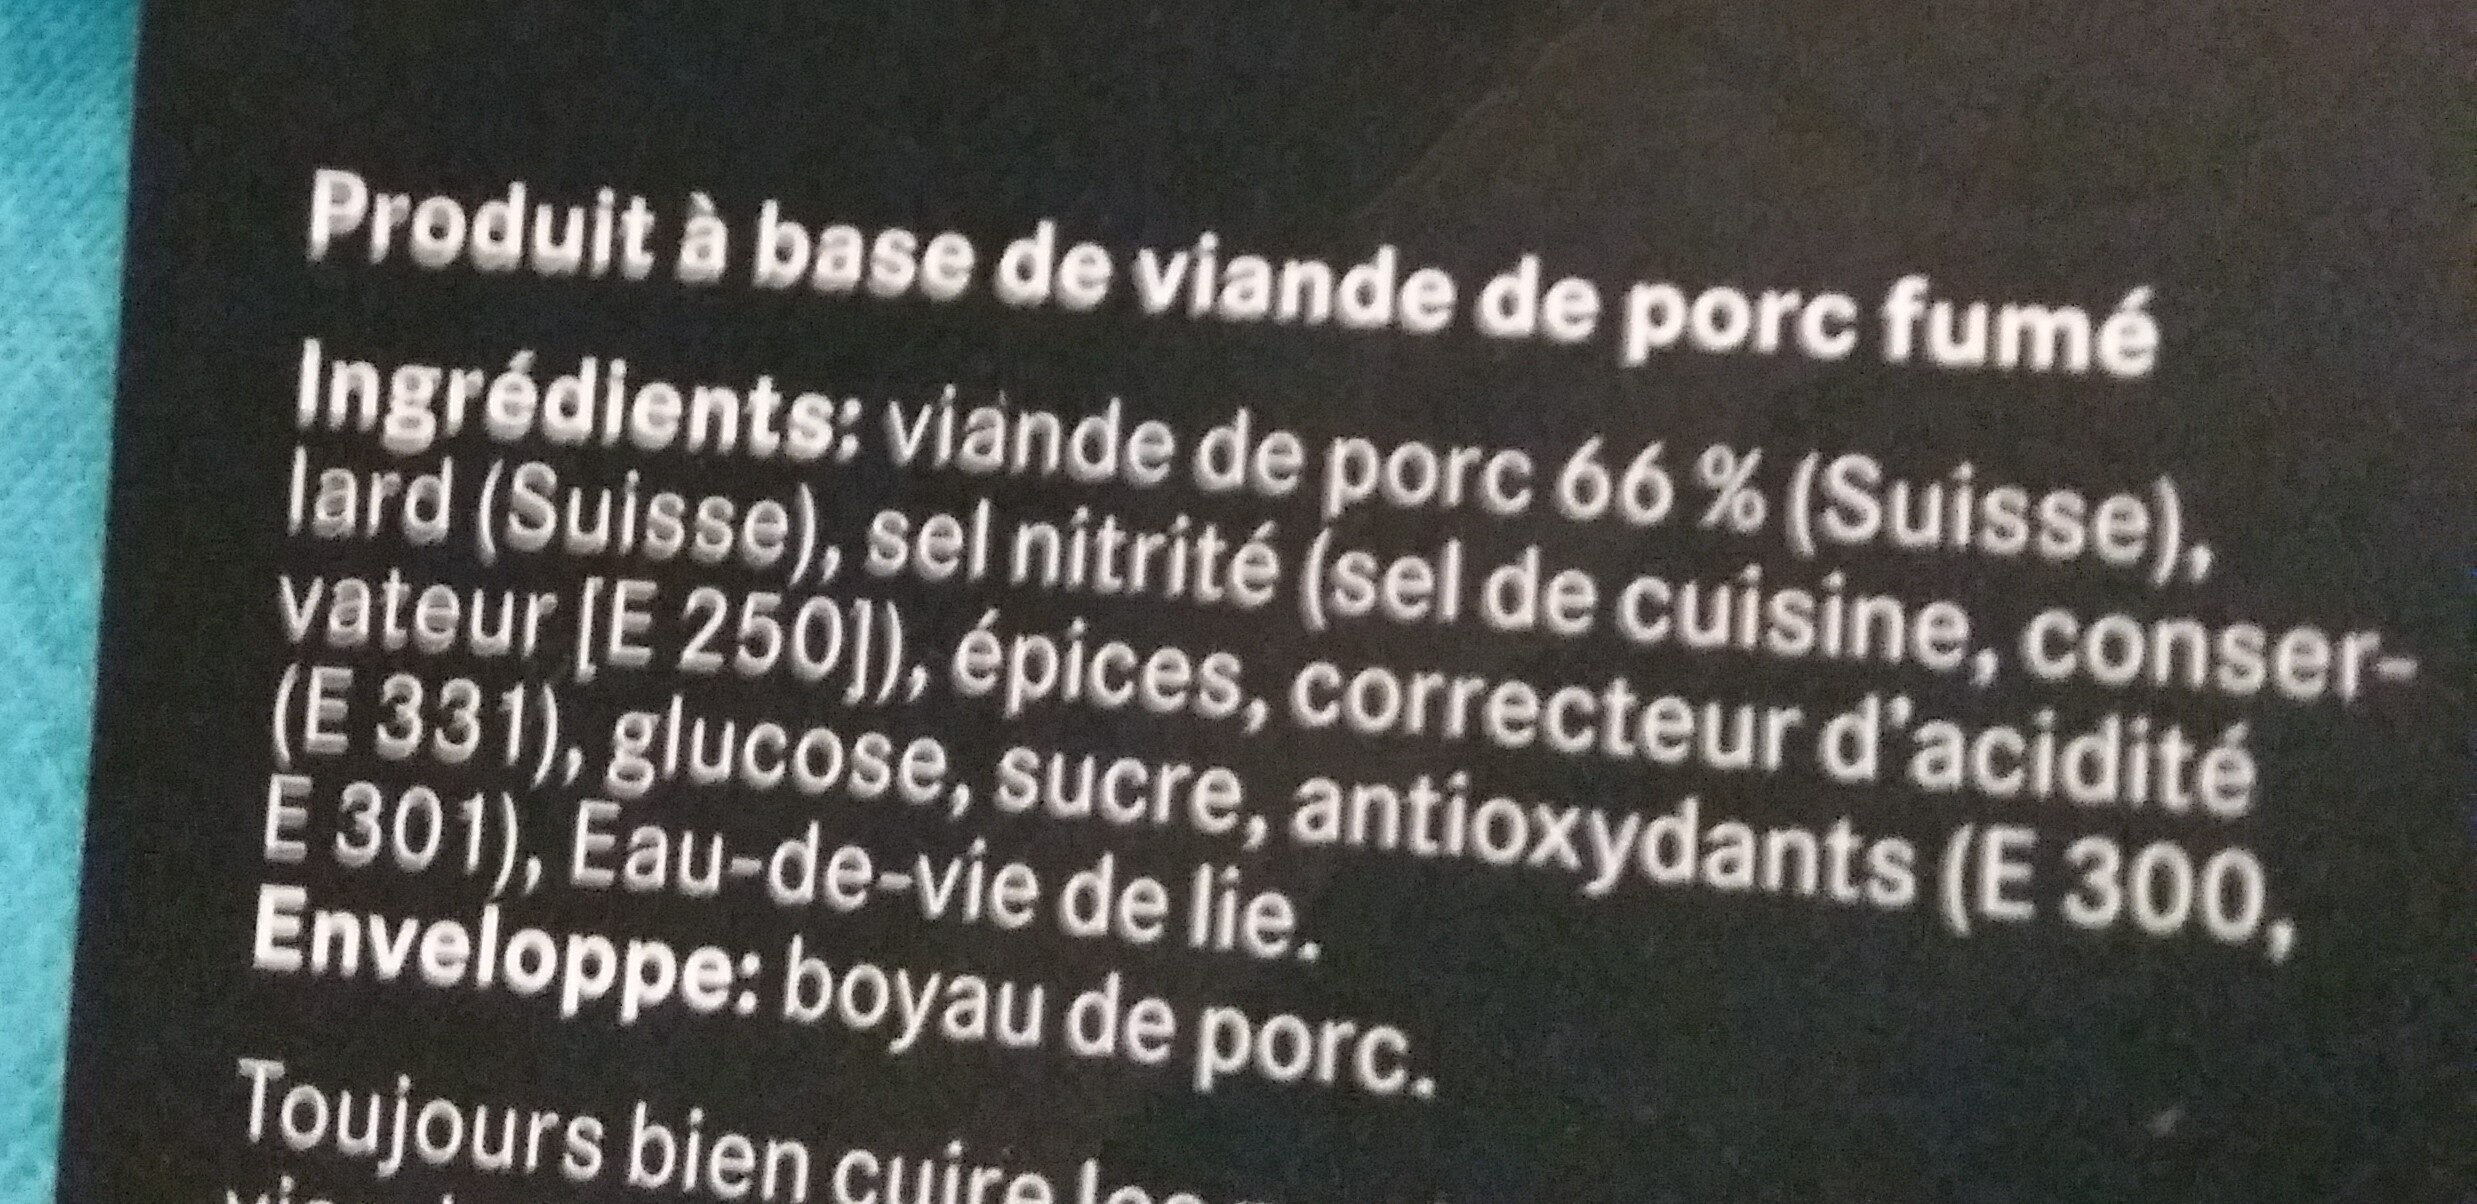 saucisson vaudois - Ingredients - fr